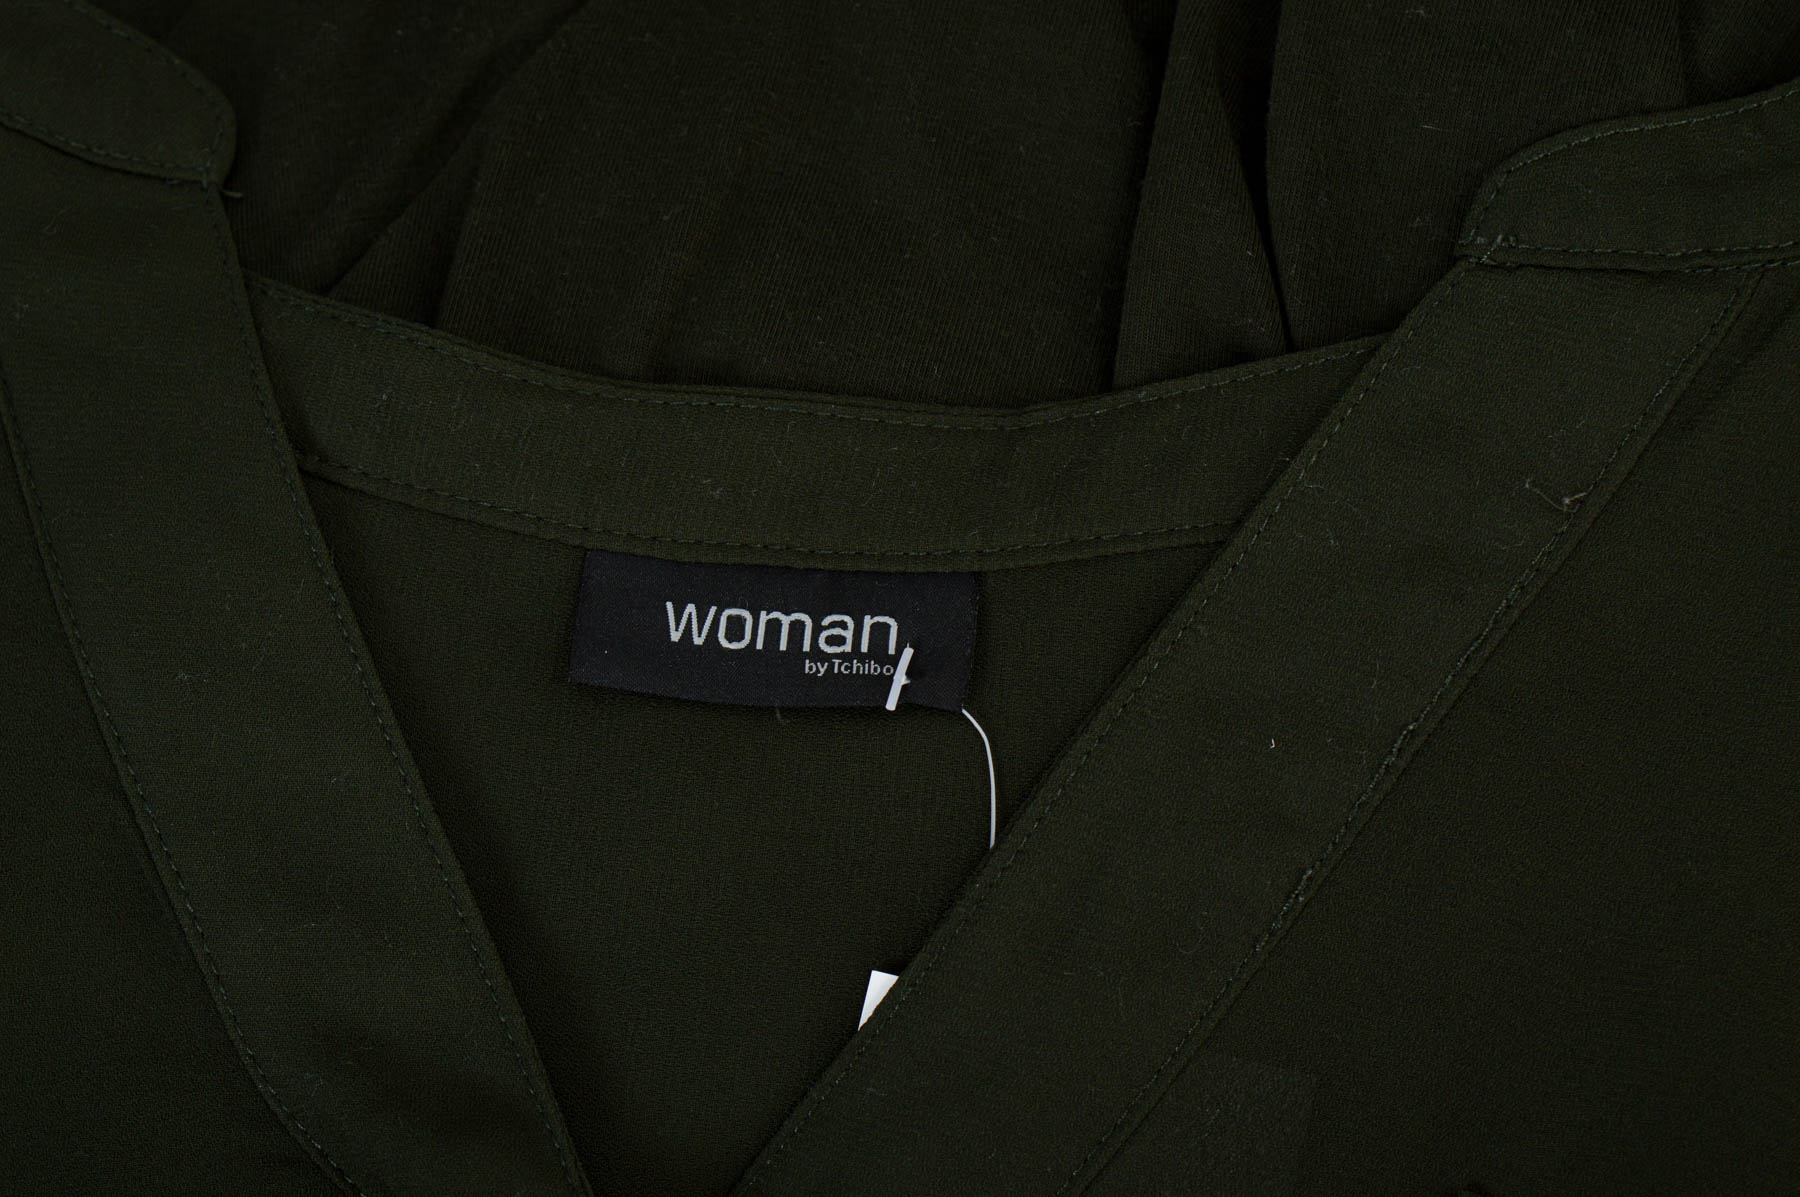 Women's shirt - Woman by Tchibo - 2